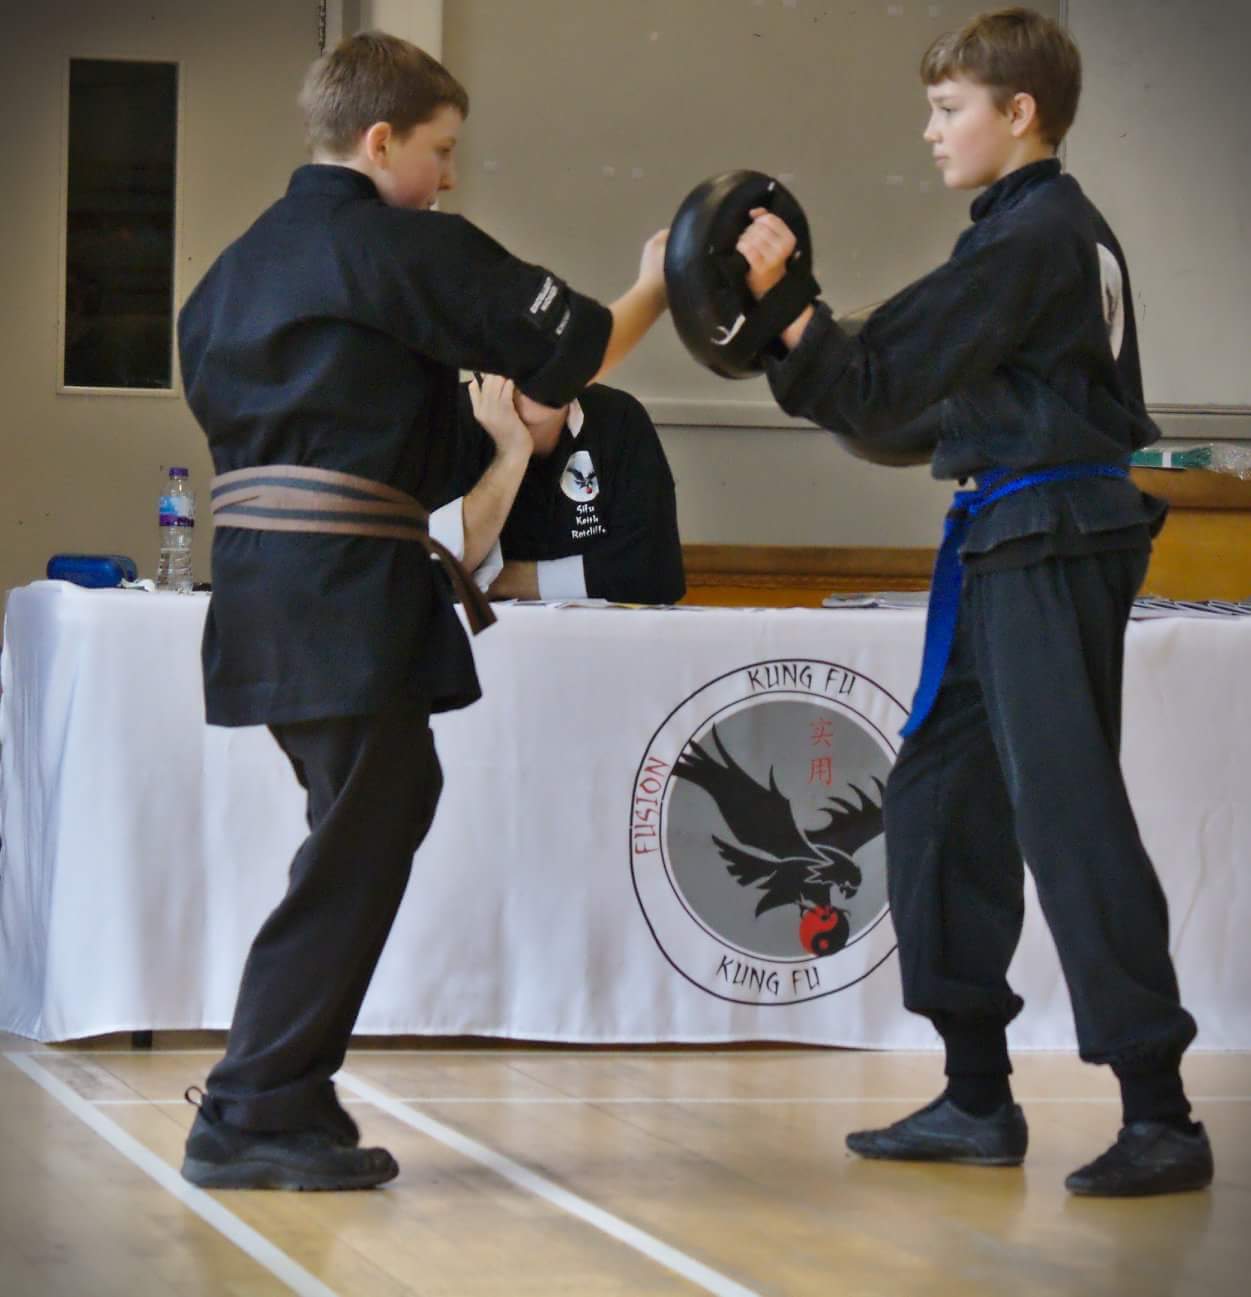 2 junior students sparring at fusion kung fu